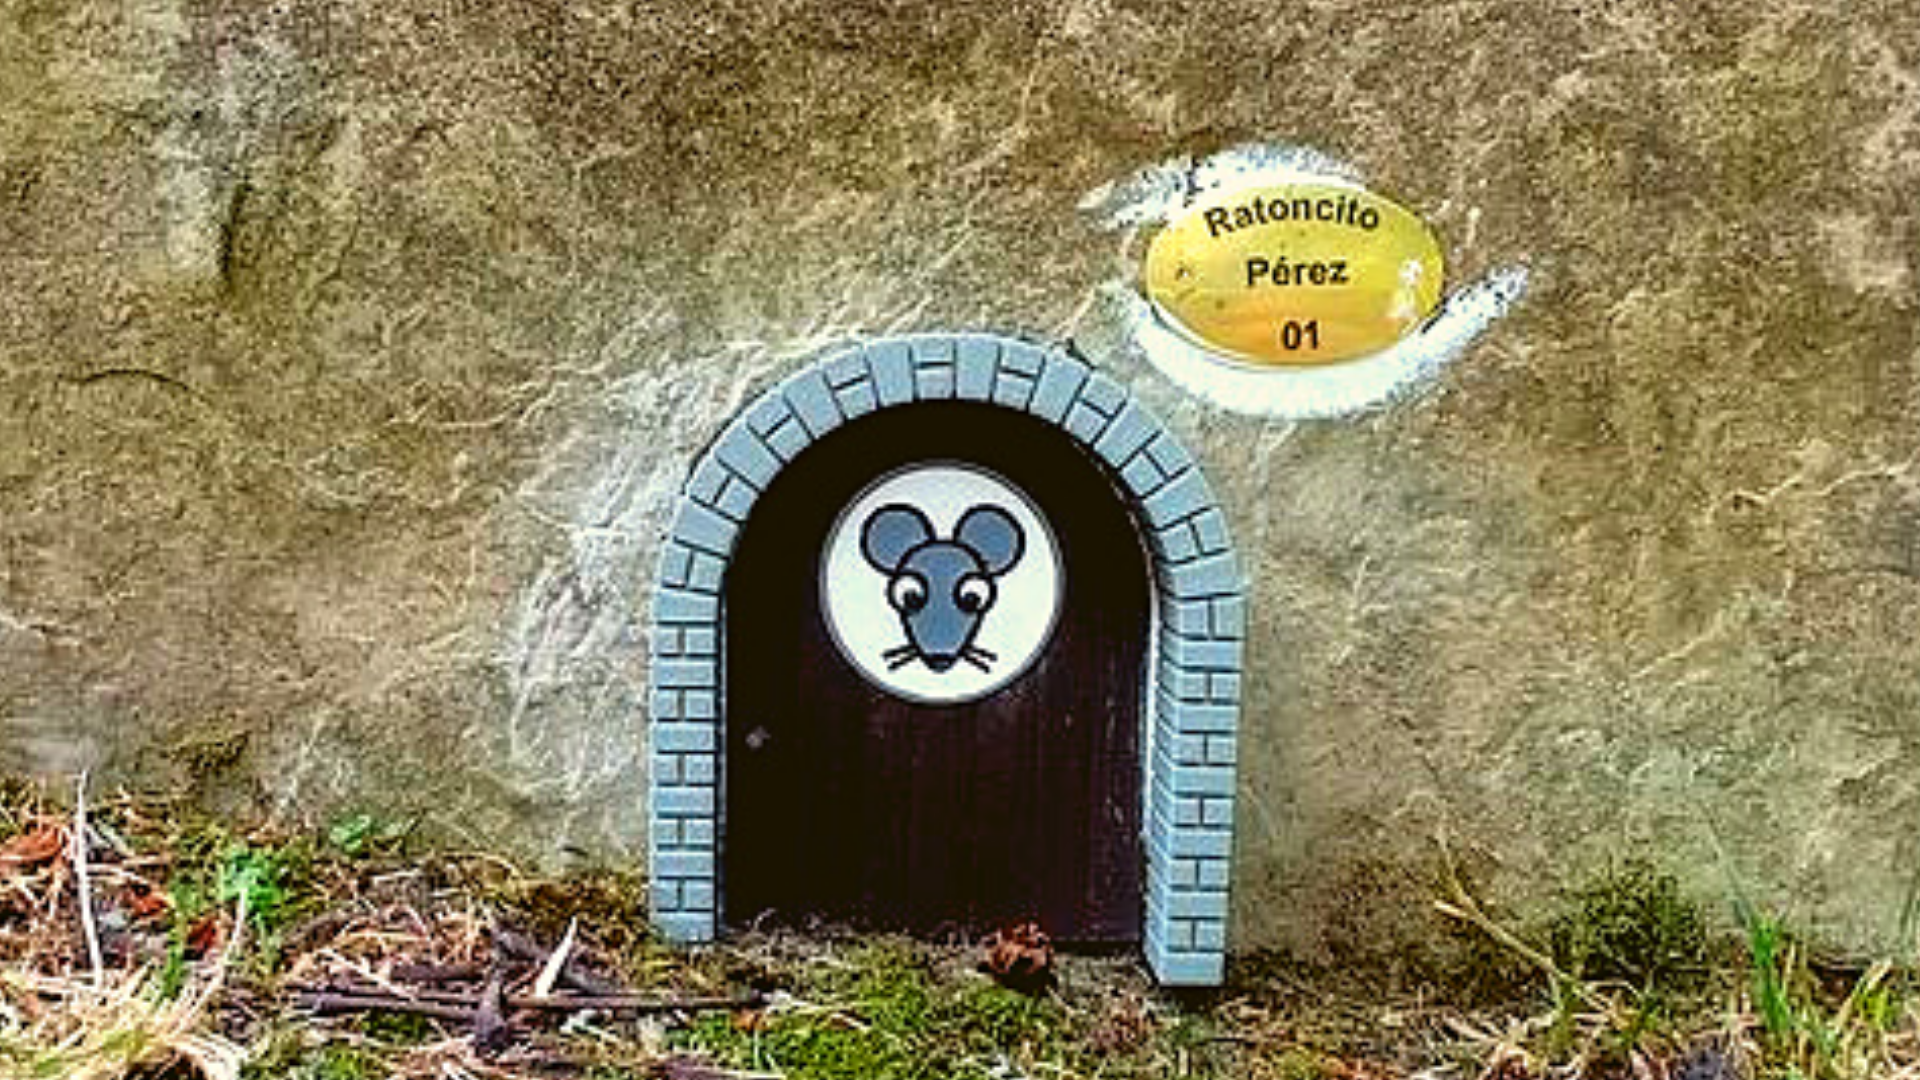 La puerta secreta de la casa del ratoncito Pérez está en